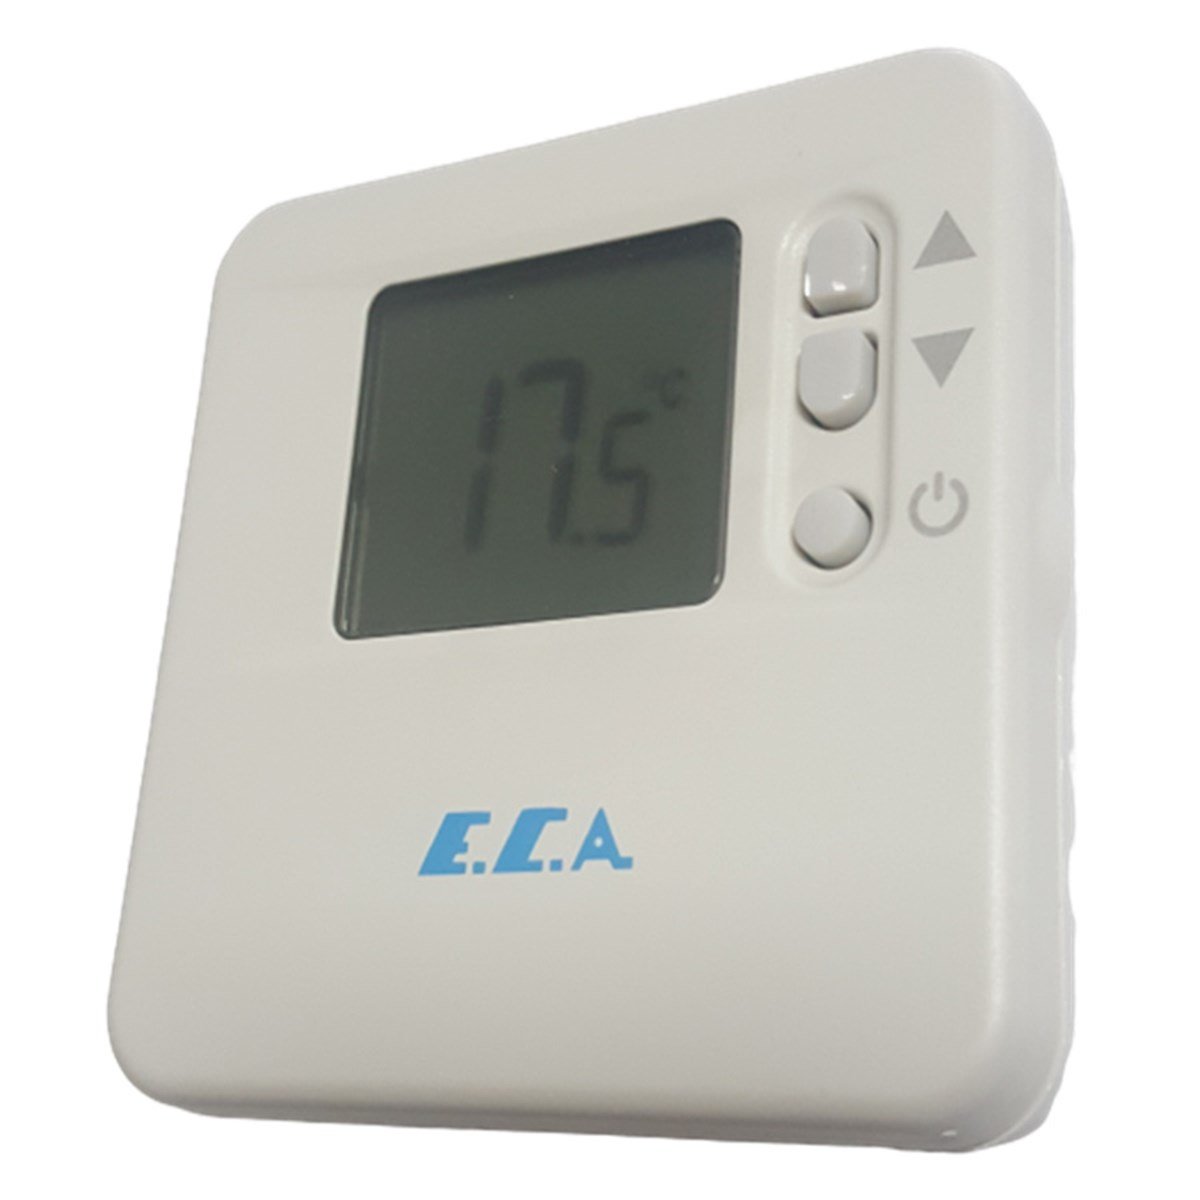 Eca DT902 TPI Kontrollü On/Off Dijital Oda Termostatı Kablolu